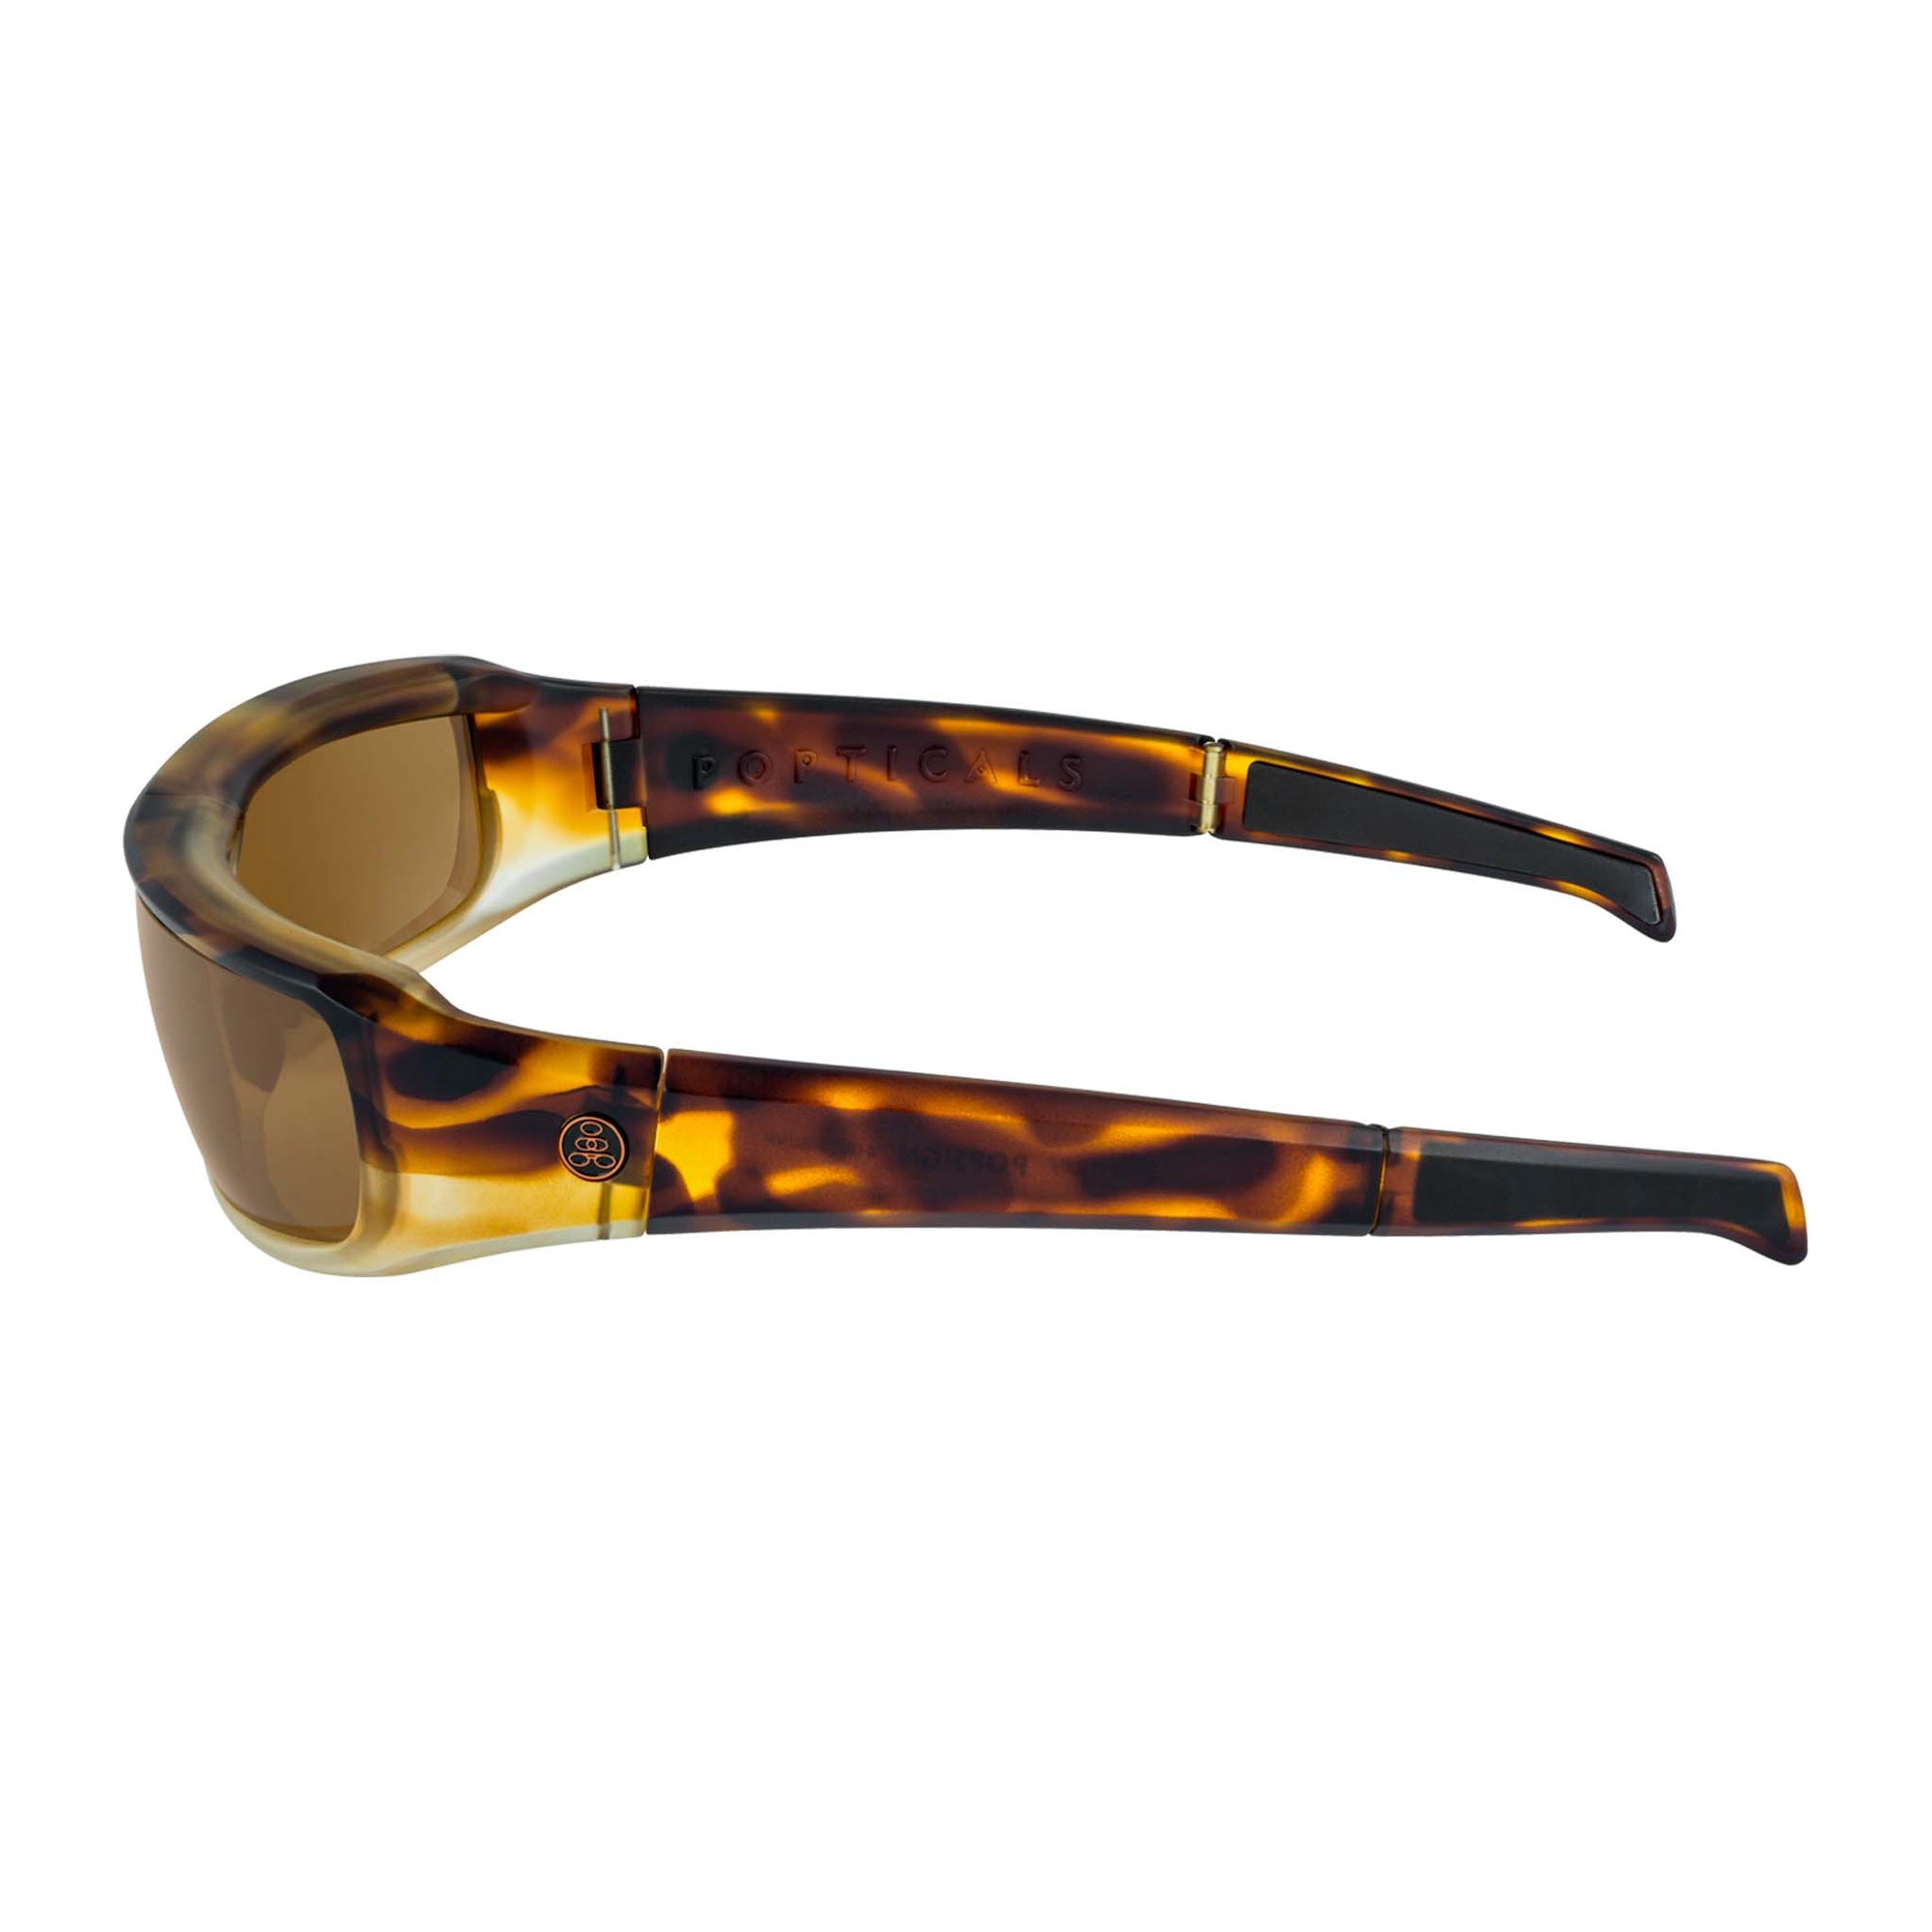 Popticals, Premium Compact Sunglasses, PopSign, 010020-BUNP, Polarized Sunglasses, Matte Tortoise/Crystal Frame, Brown Lenses, Side View